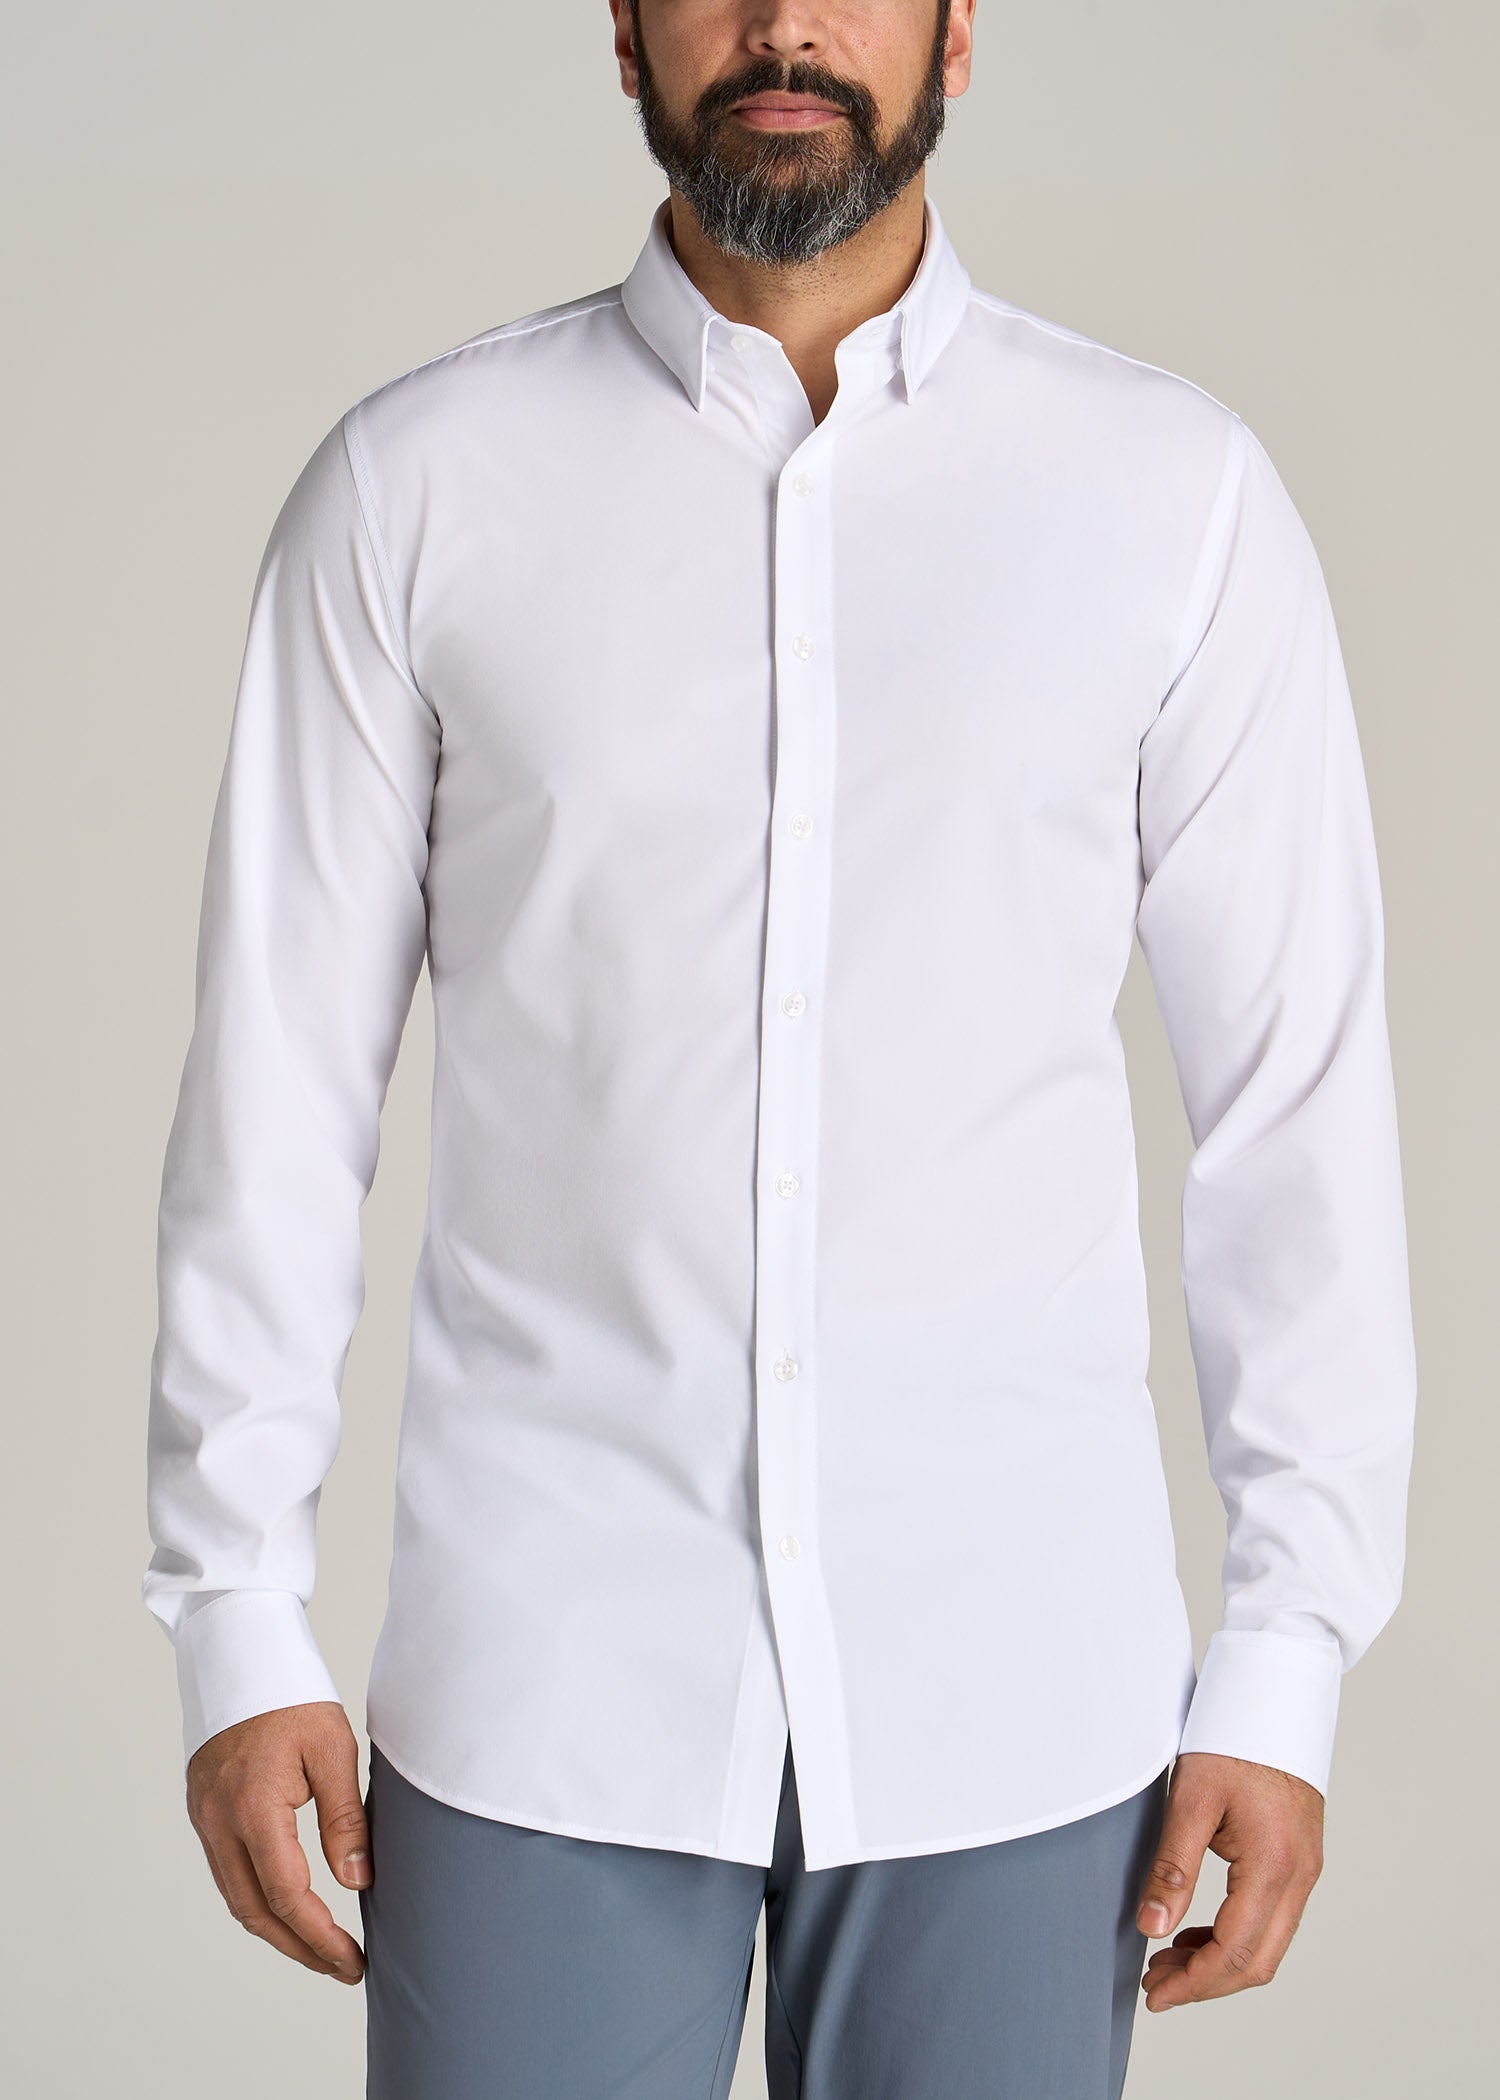 white dress shirts for men